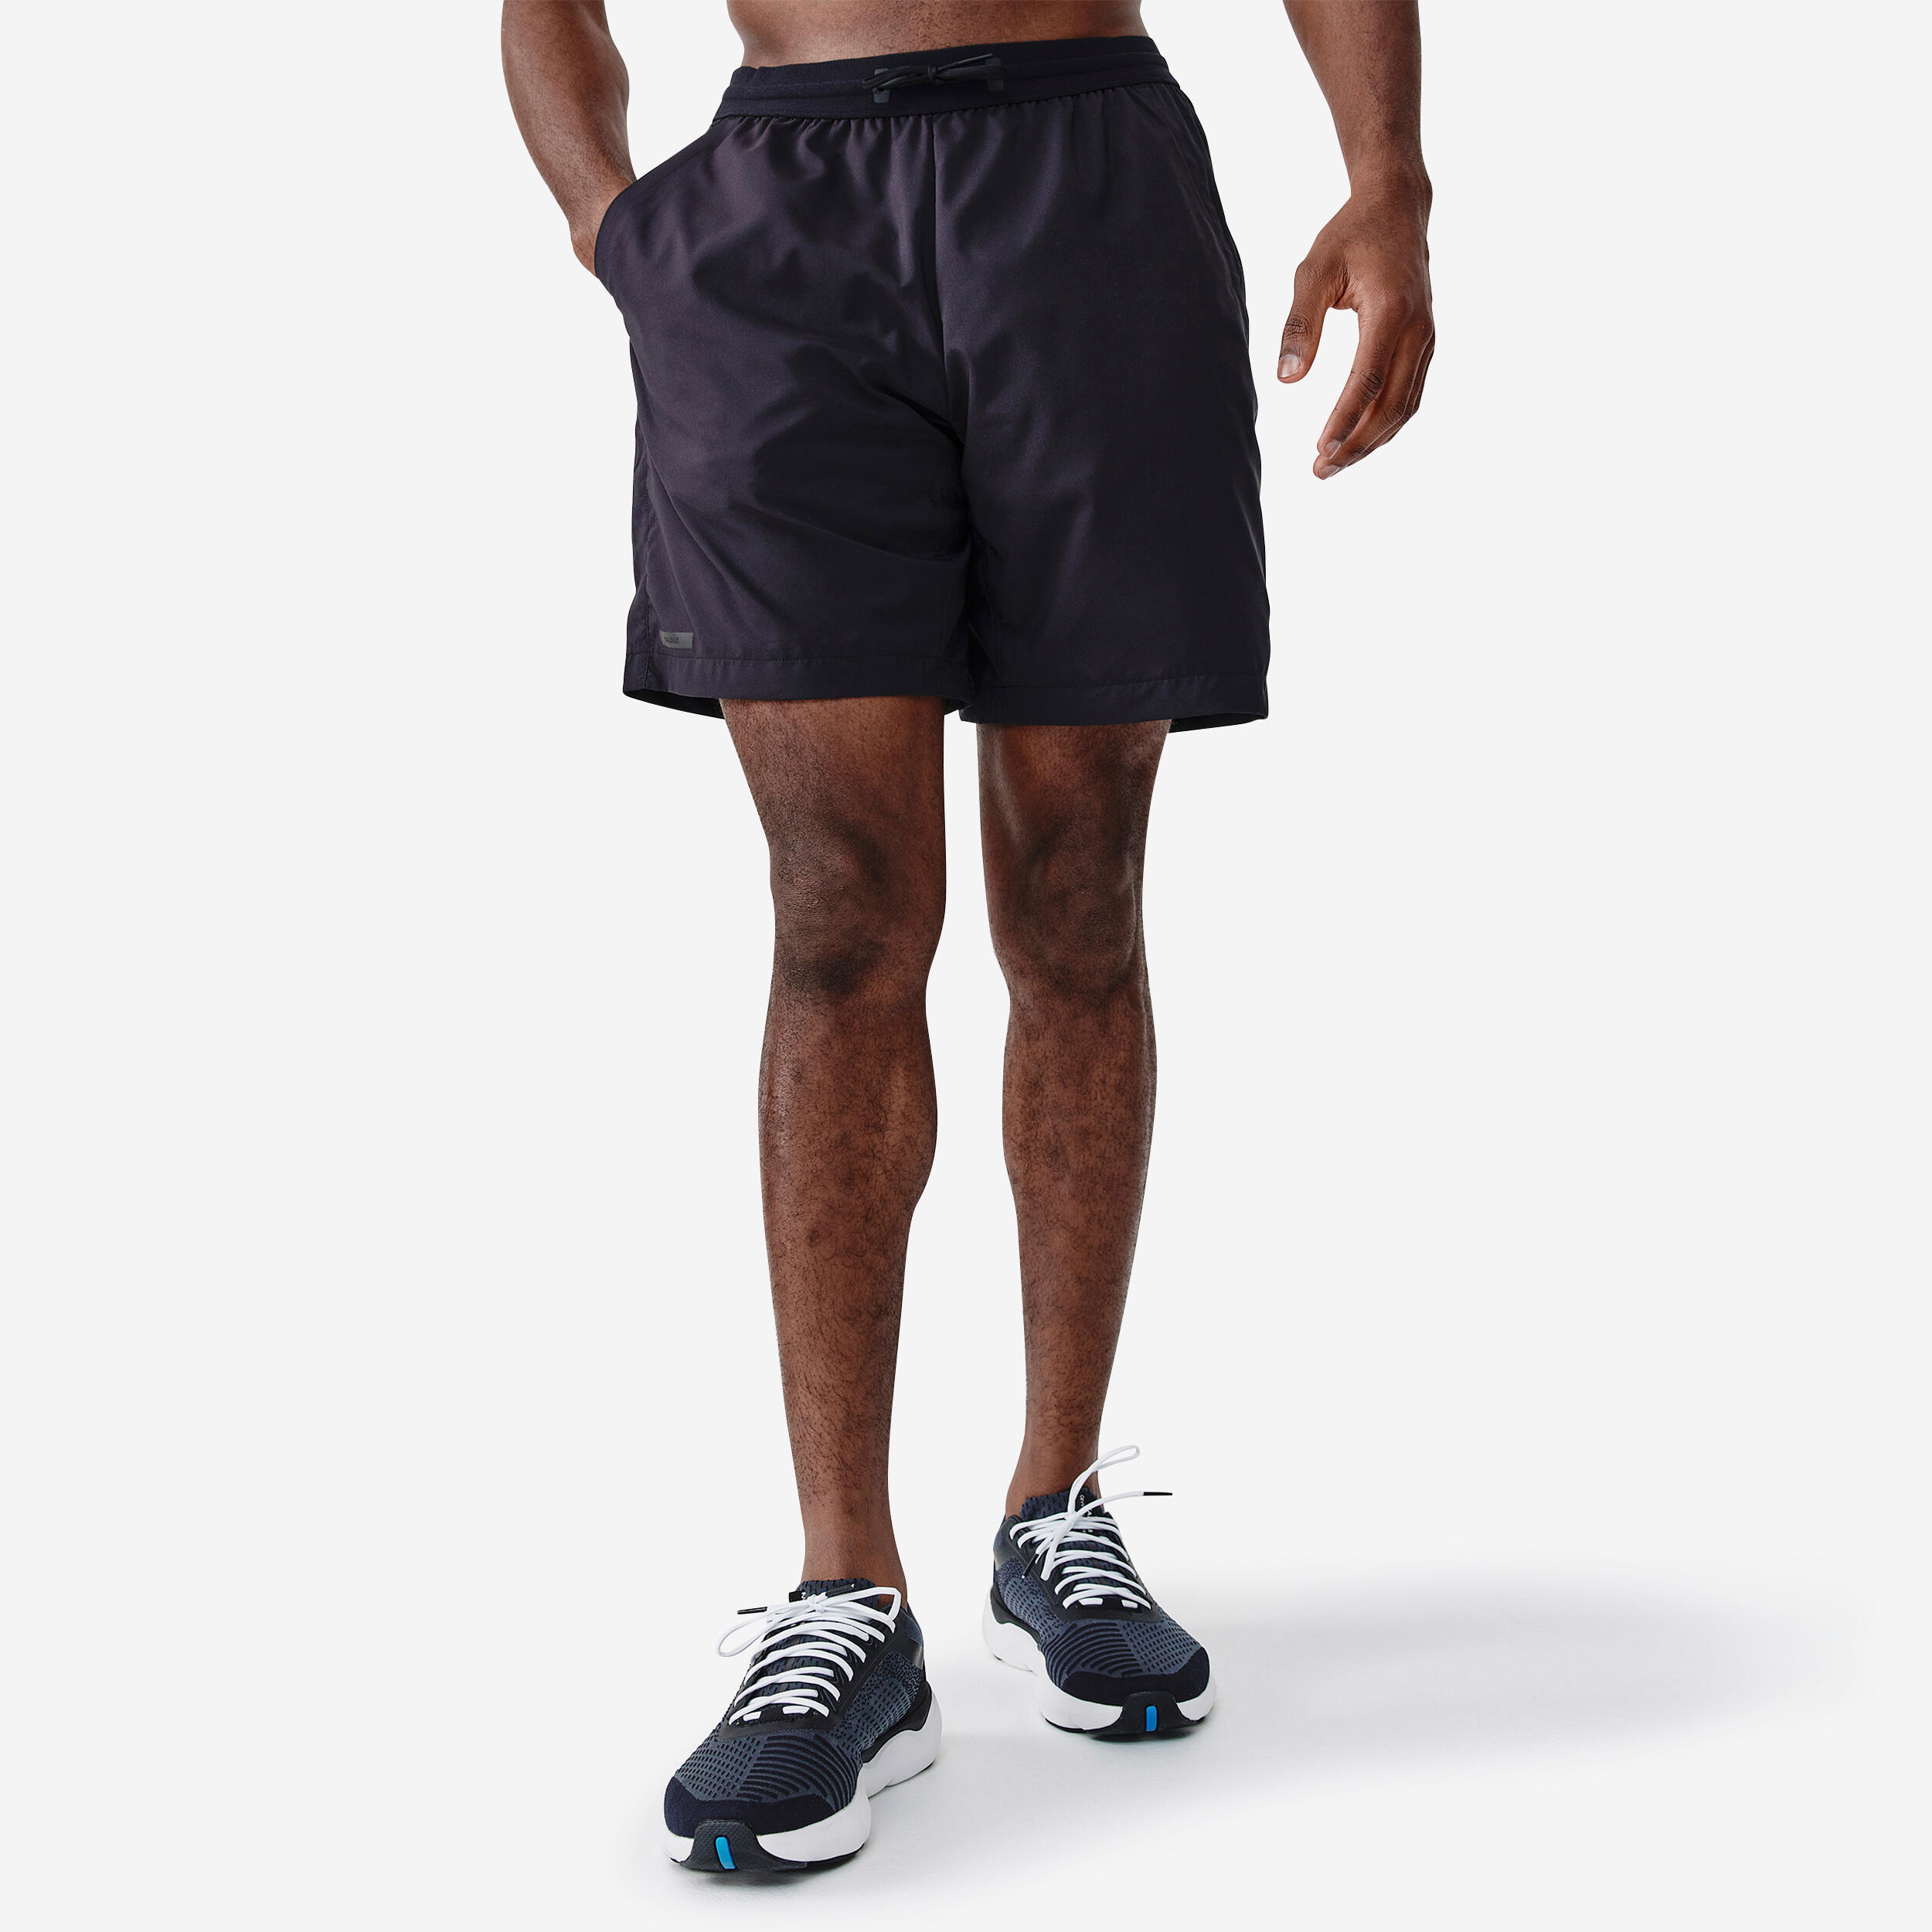 DARESAY Men's Dry-Fit Sweat-Resistant Active Athletic Shorts